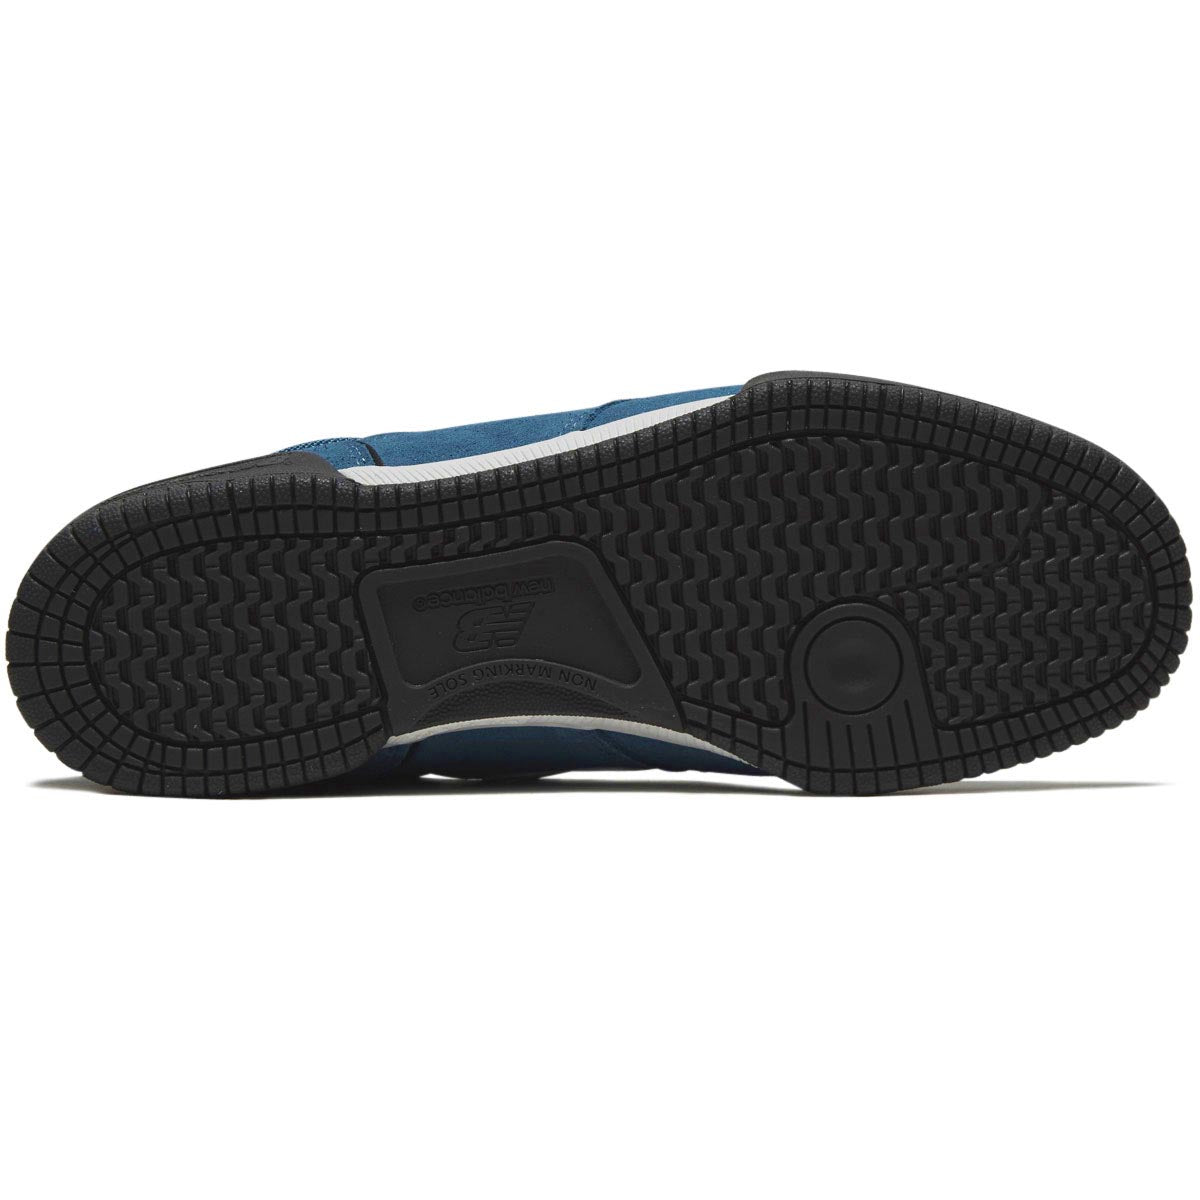 New Balance 600 Tom Knox Shoes - Elemental Blue/Black image 4